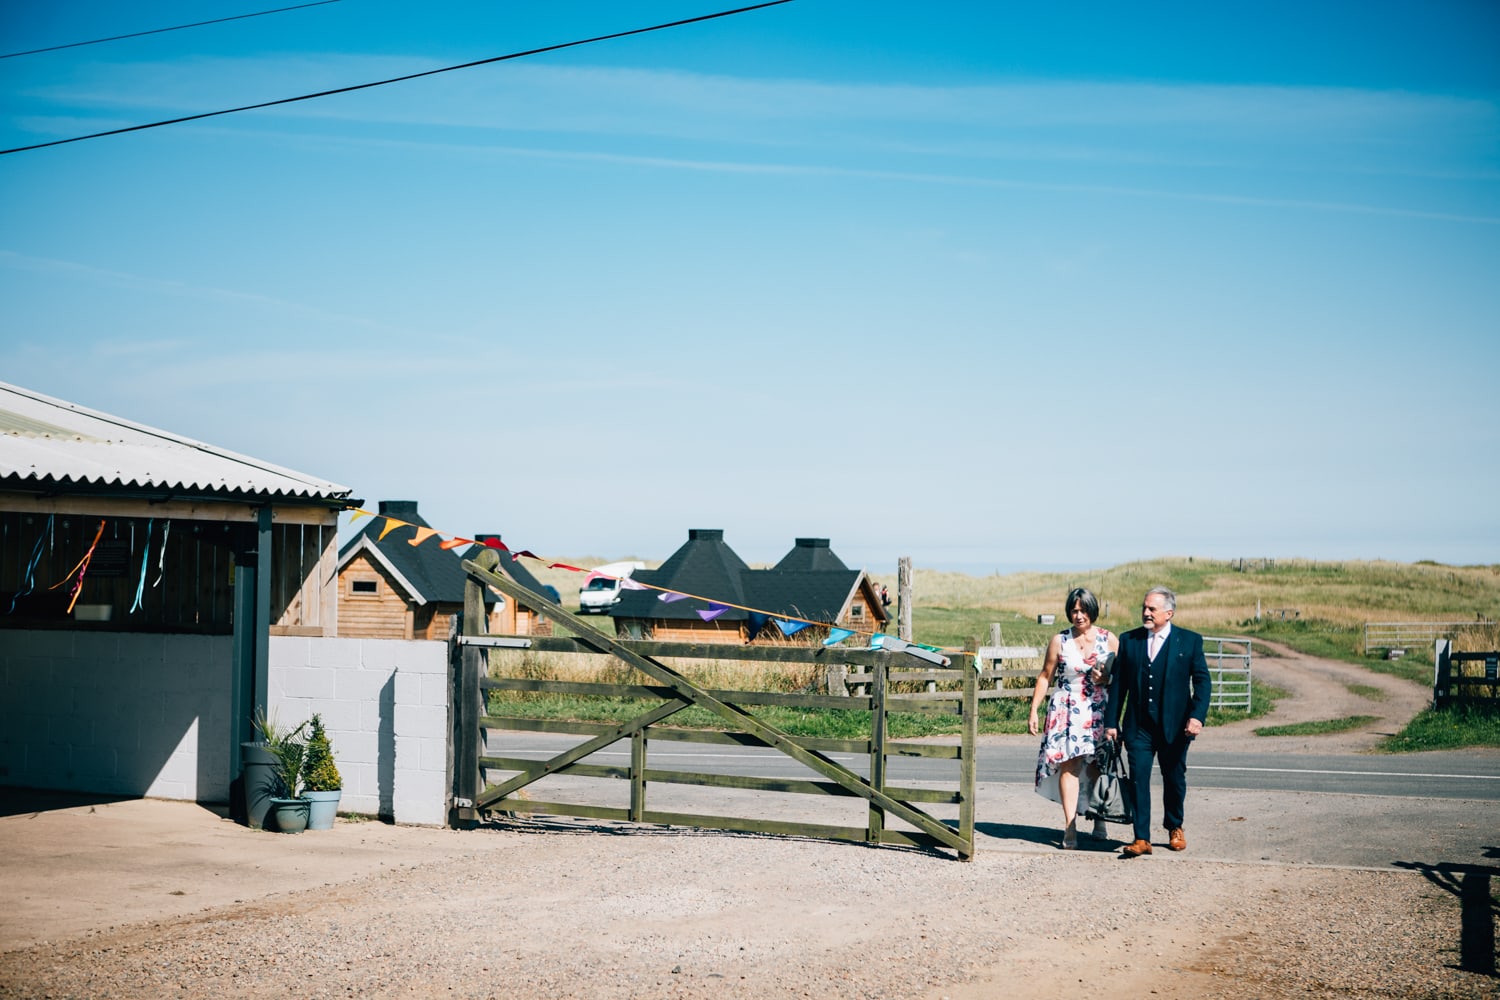 The Barn on The Bay Wedding Photography